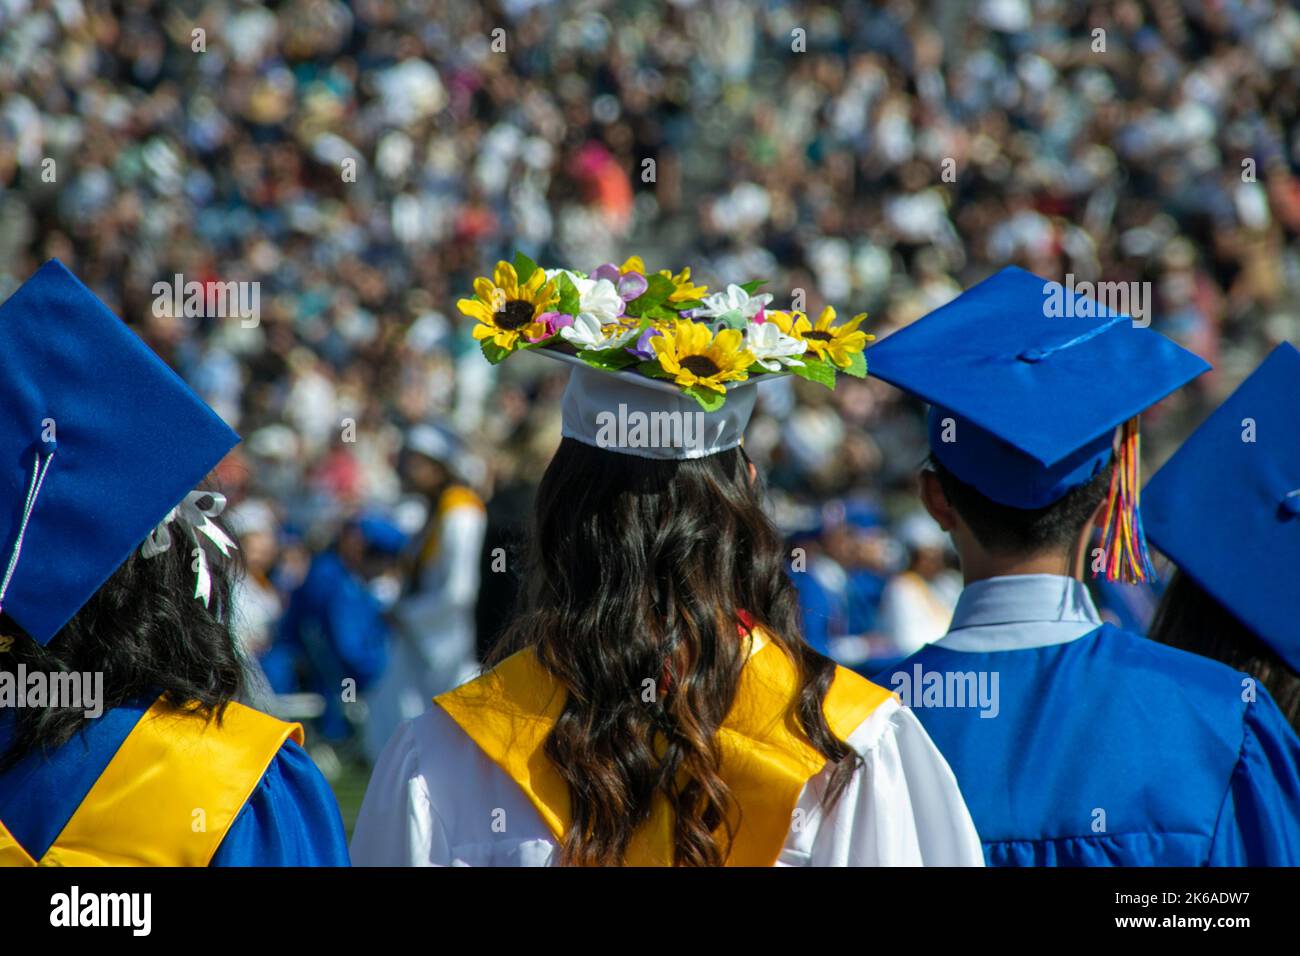 A high school graduate in Huntington Beach, CA, sports an unconventional graduation cap featuring a flower arrangement. Stock Photo